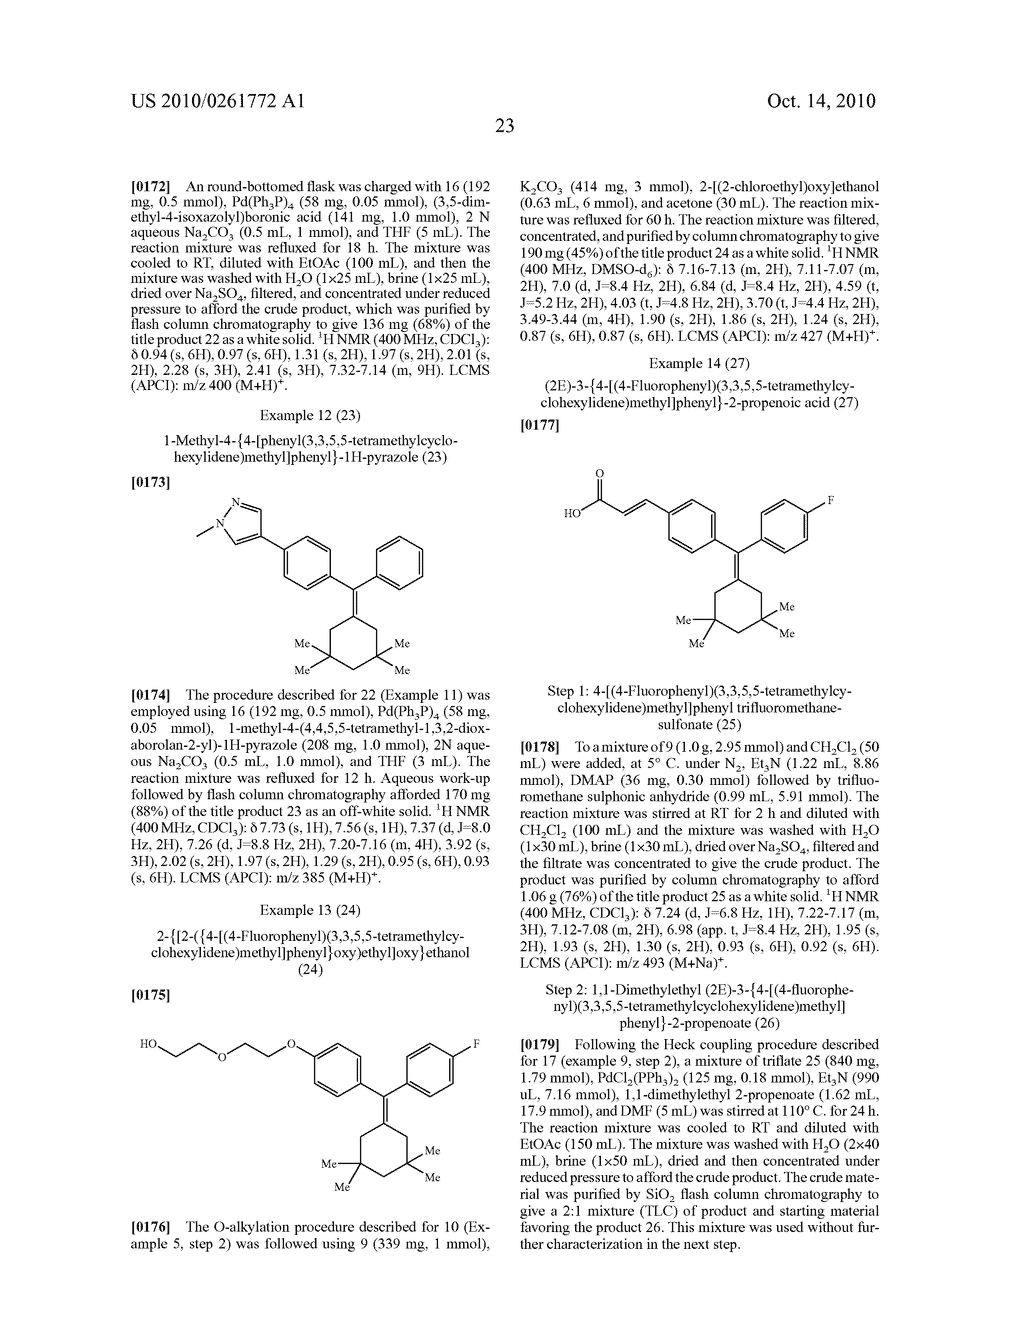 Cycloalkylidene Compounds As Selective Estrogen Receptor Modulators - diagram, schematic, and image 24